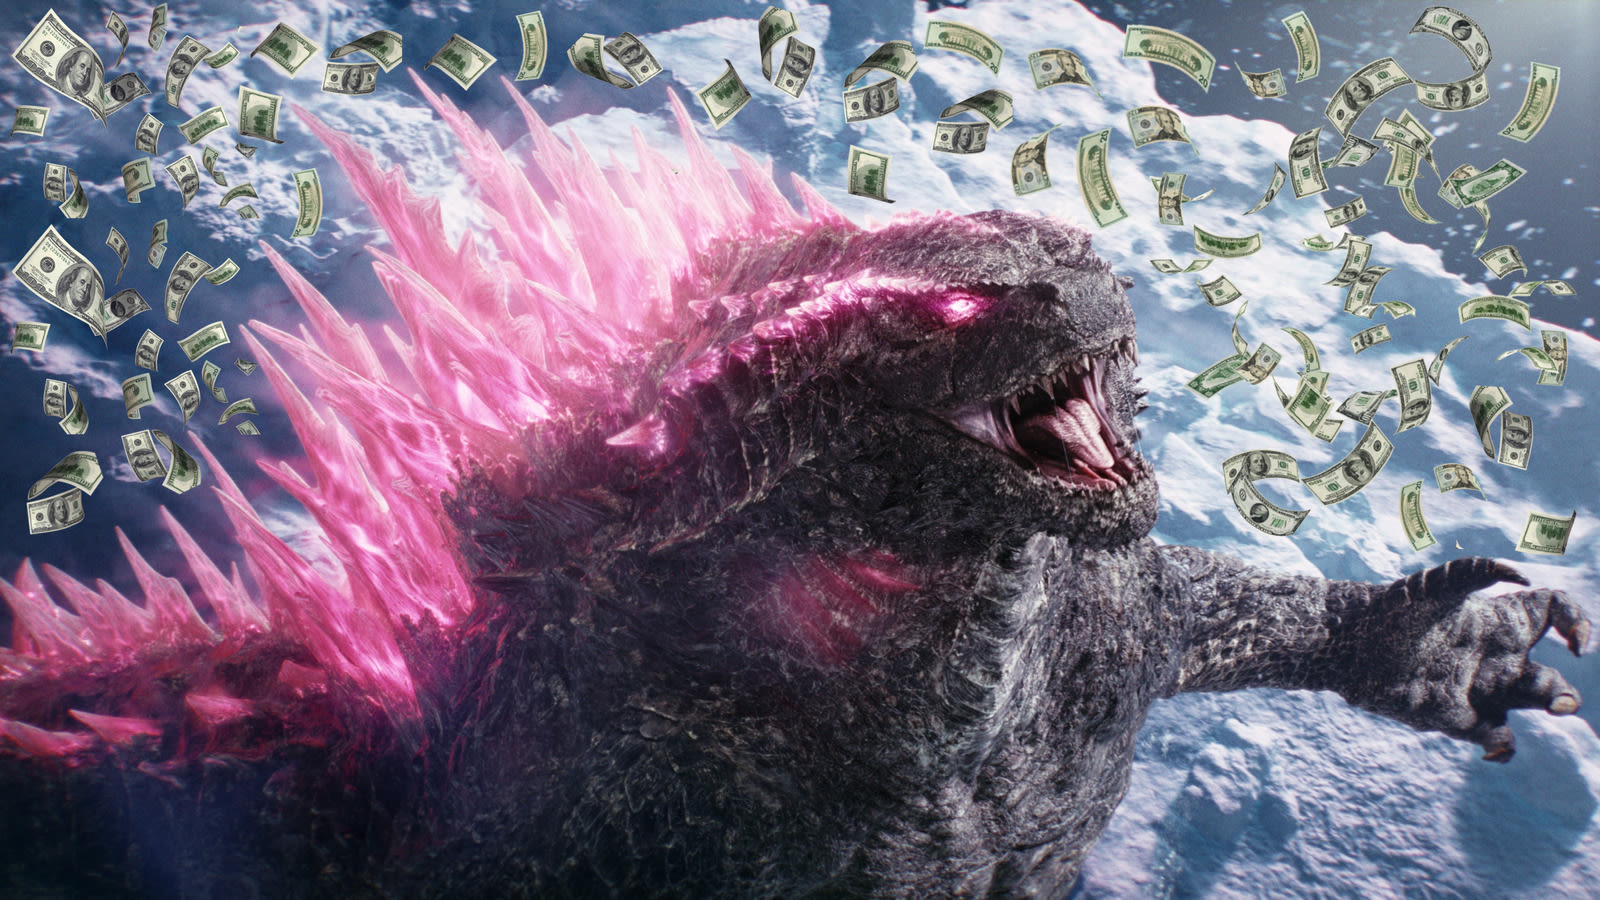 Godzilla X Kong Is Now The Highest-Grossing Godzilla Movie Ever At The Box Office - SlashFilm